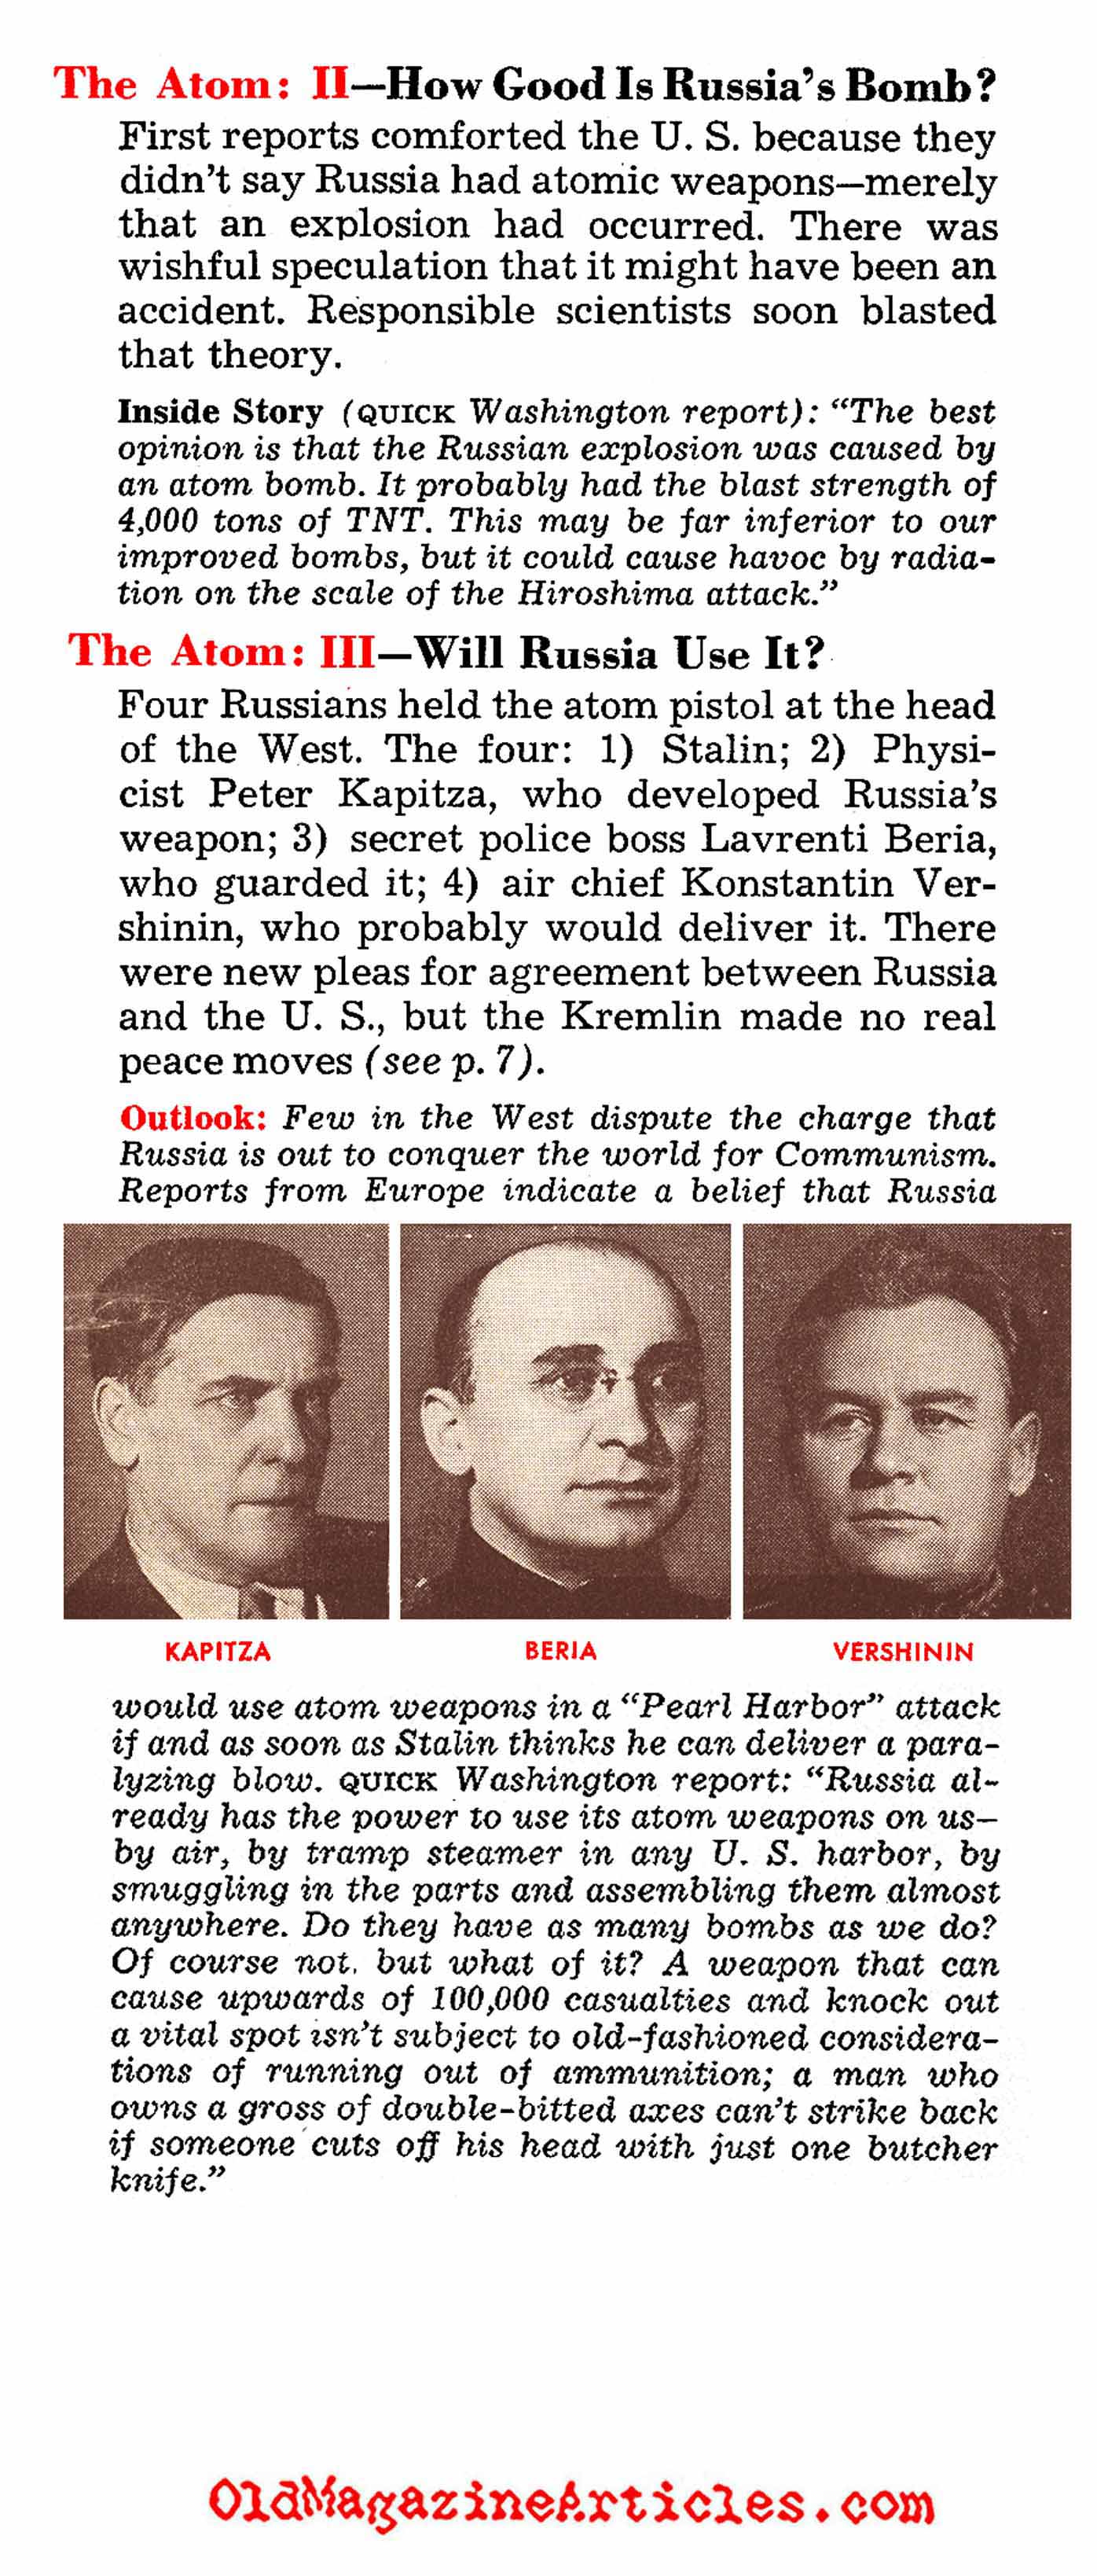 The Bomb in Soviet Hands (Quick Magazine, 1949)